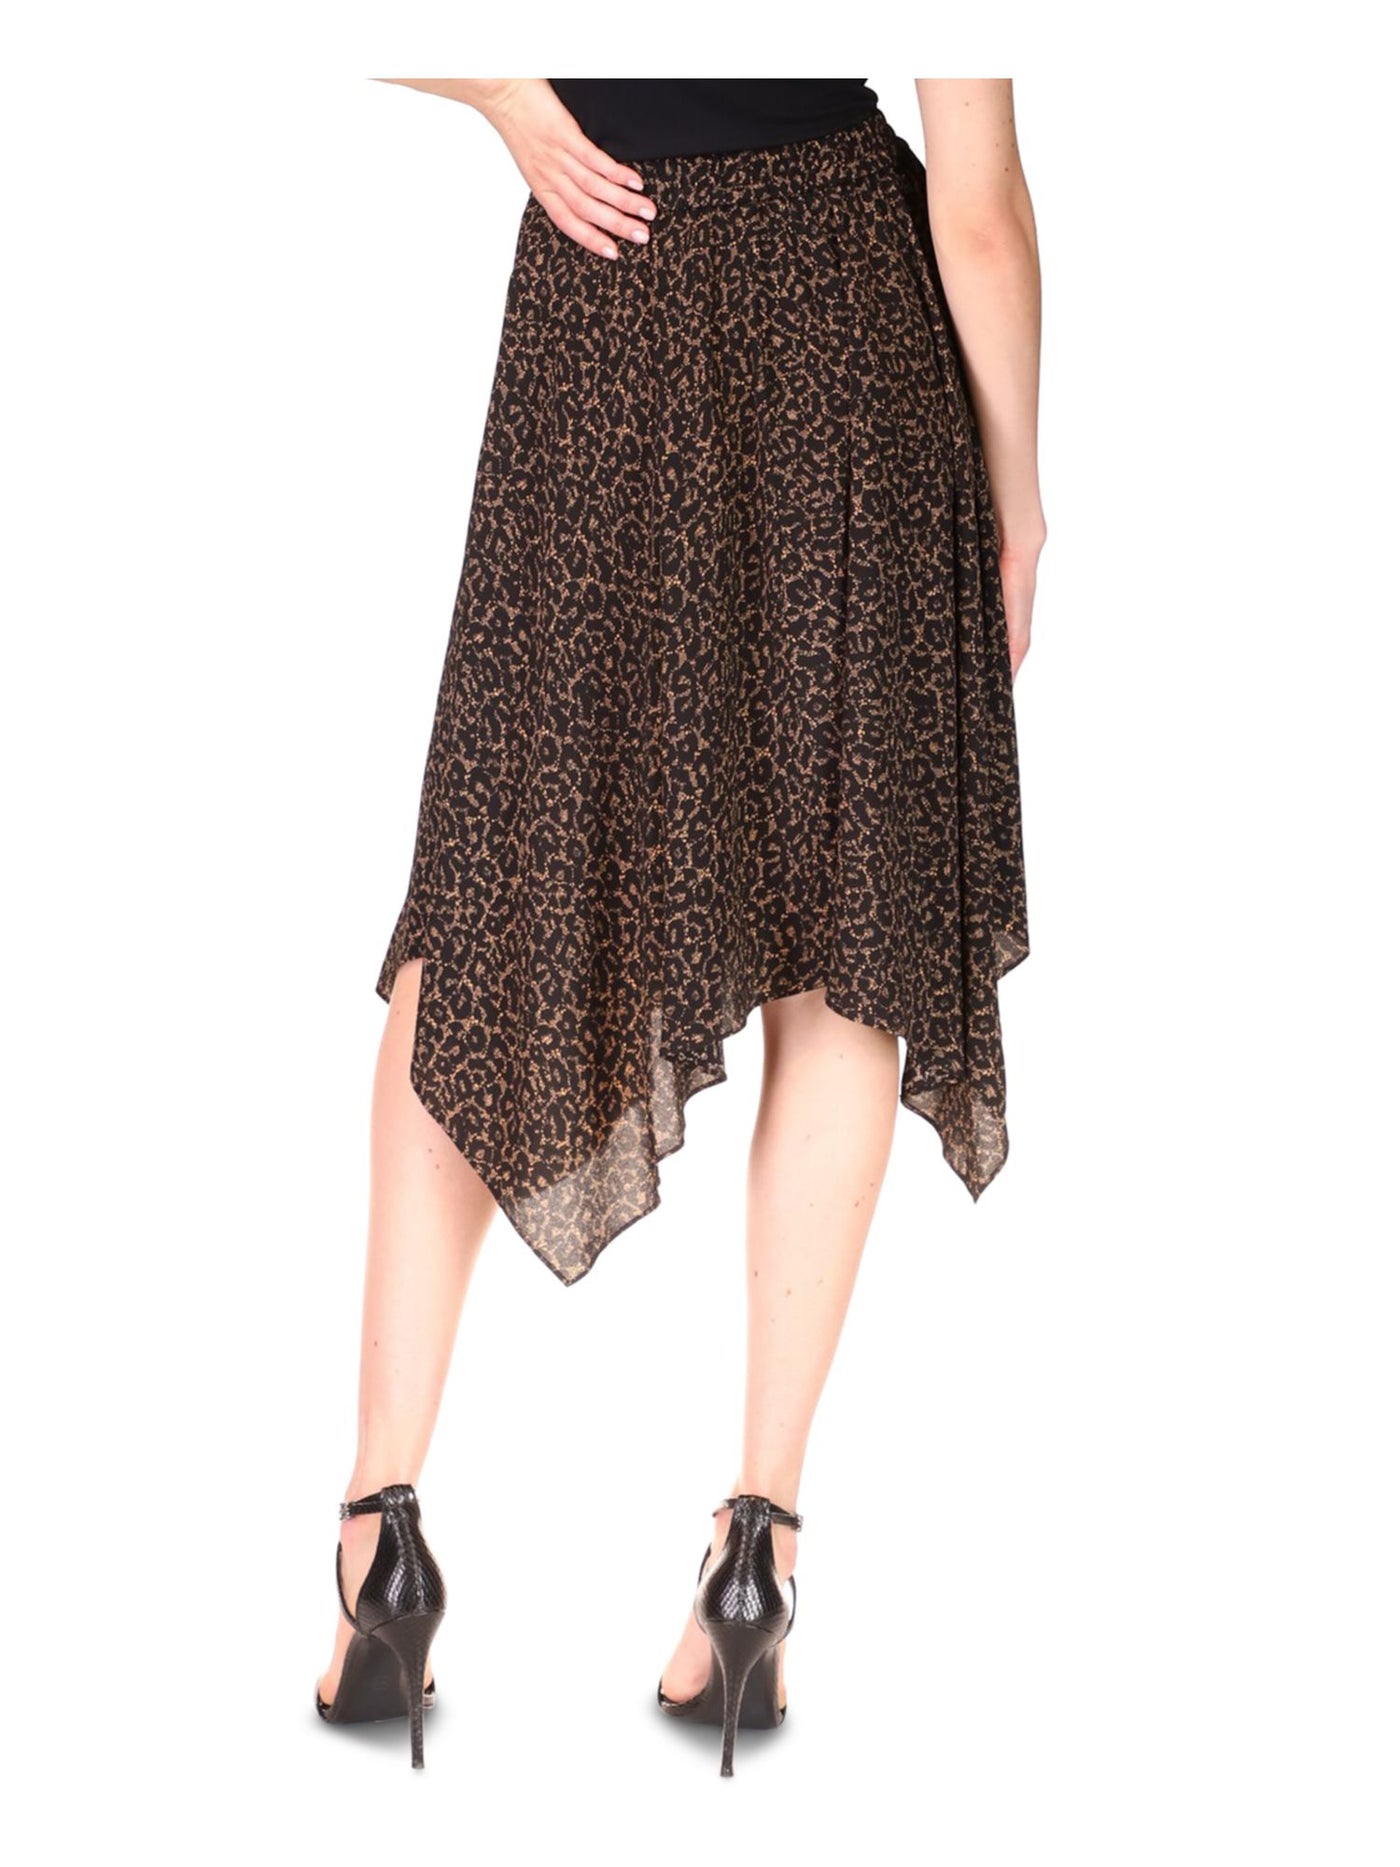 MICHAEL MICHAEL KORS Womens Black Animal Print Midi A-Line Skirt XL